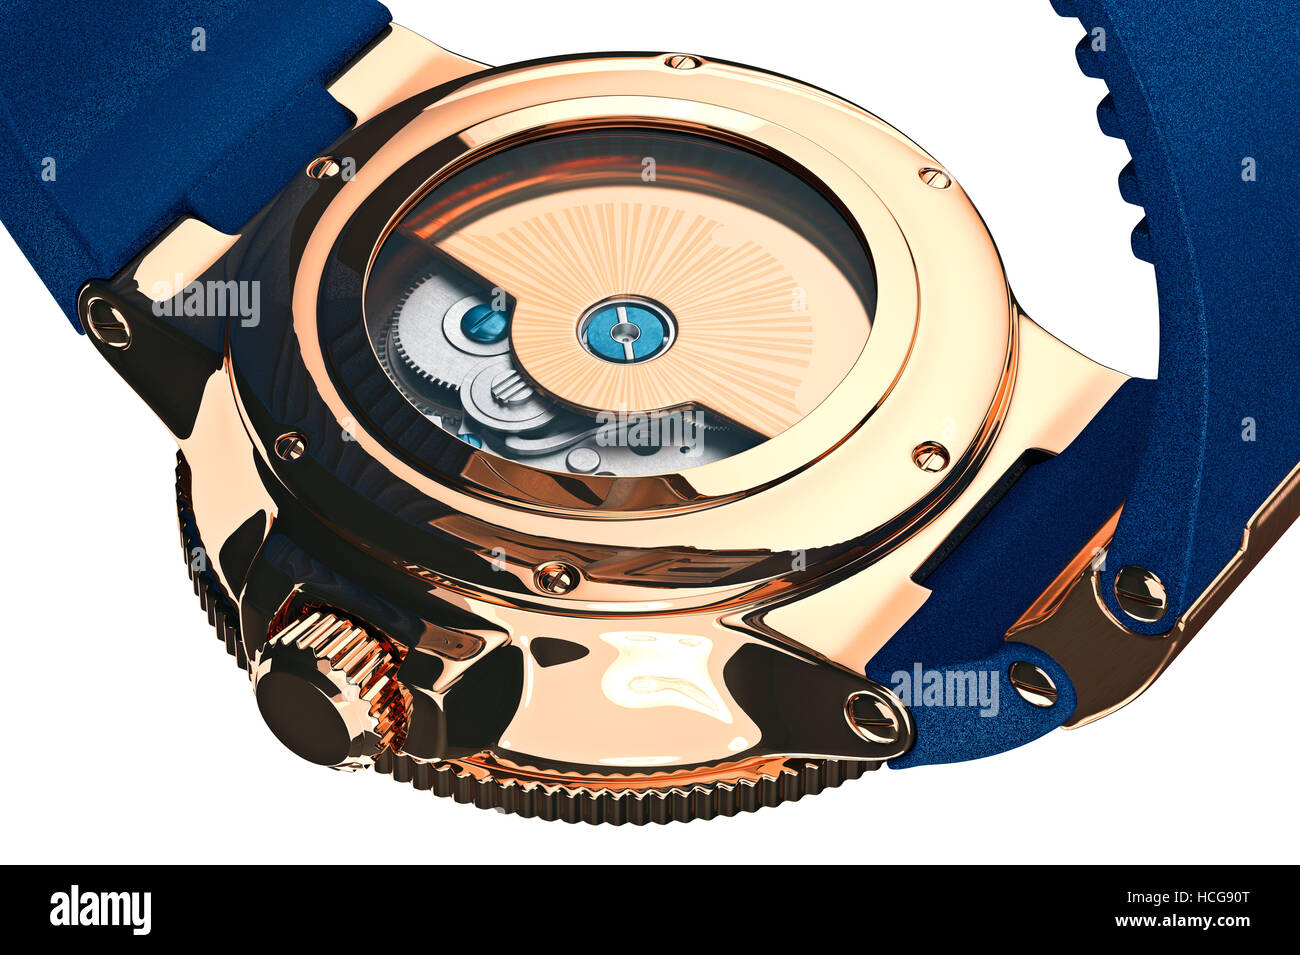 Wrist watch mechanical accessory, close view Stock Photo